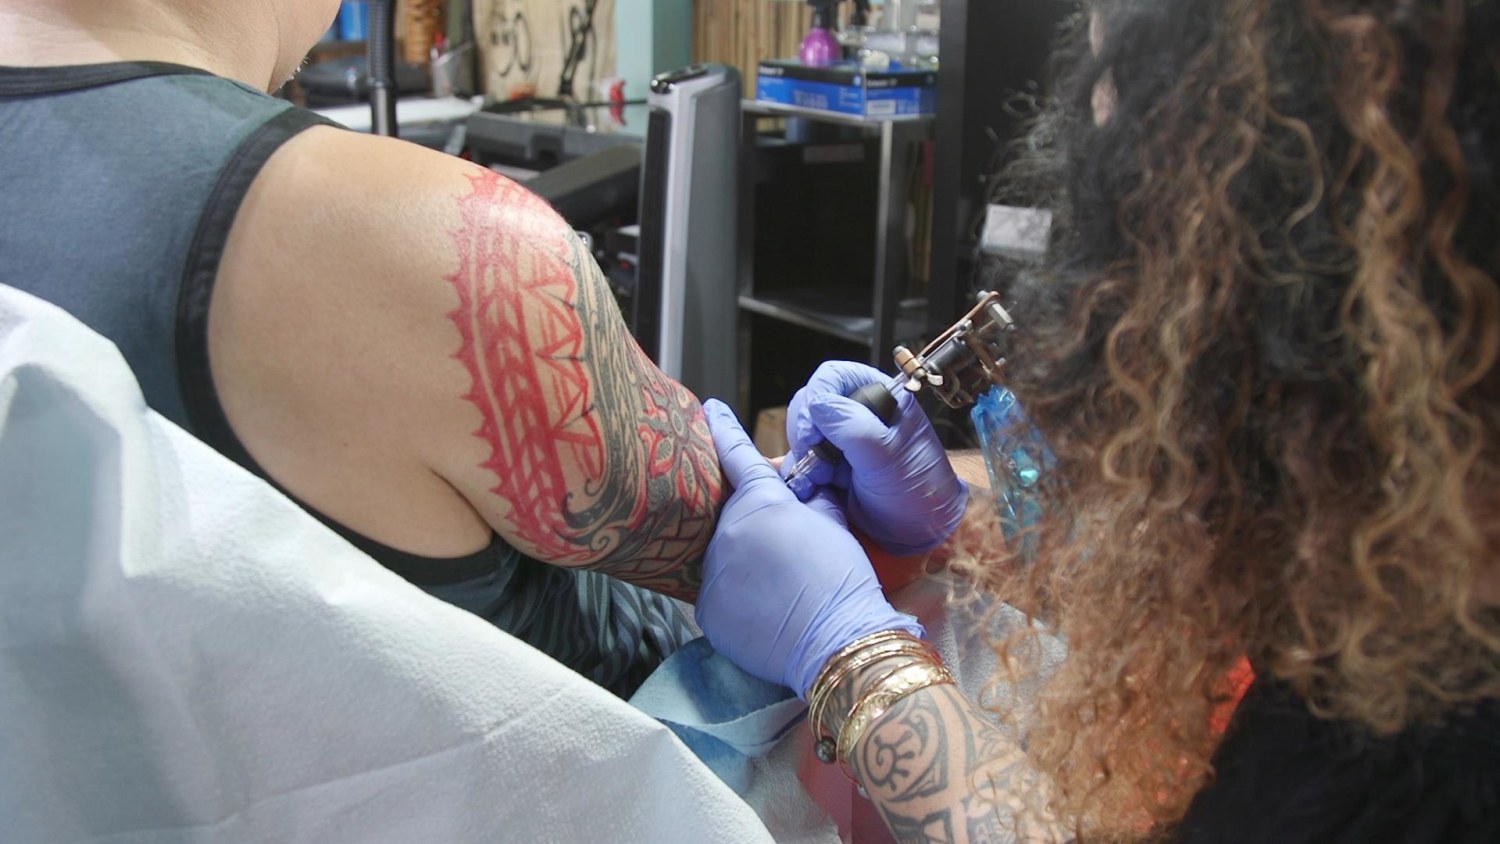 Religious tattoos: Two men of faith explain the stories behind their ink -  ABC News